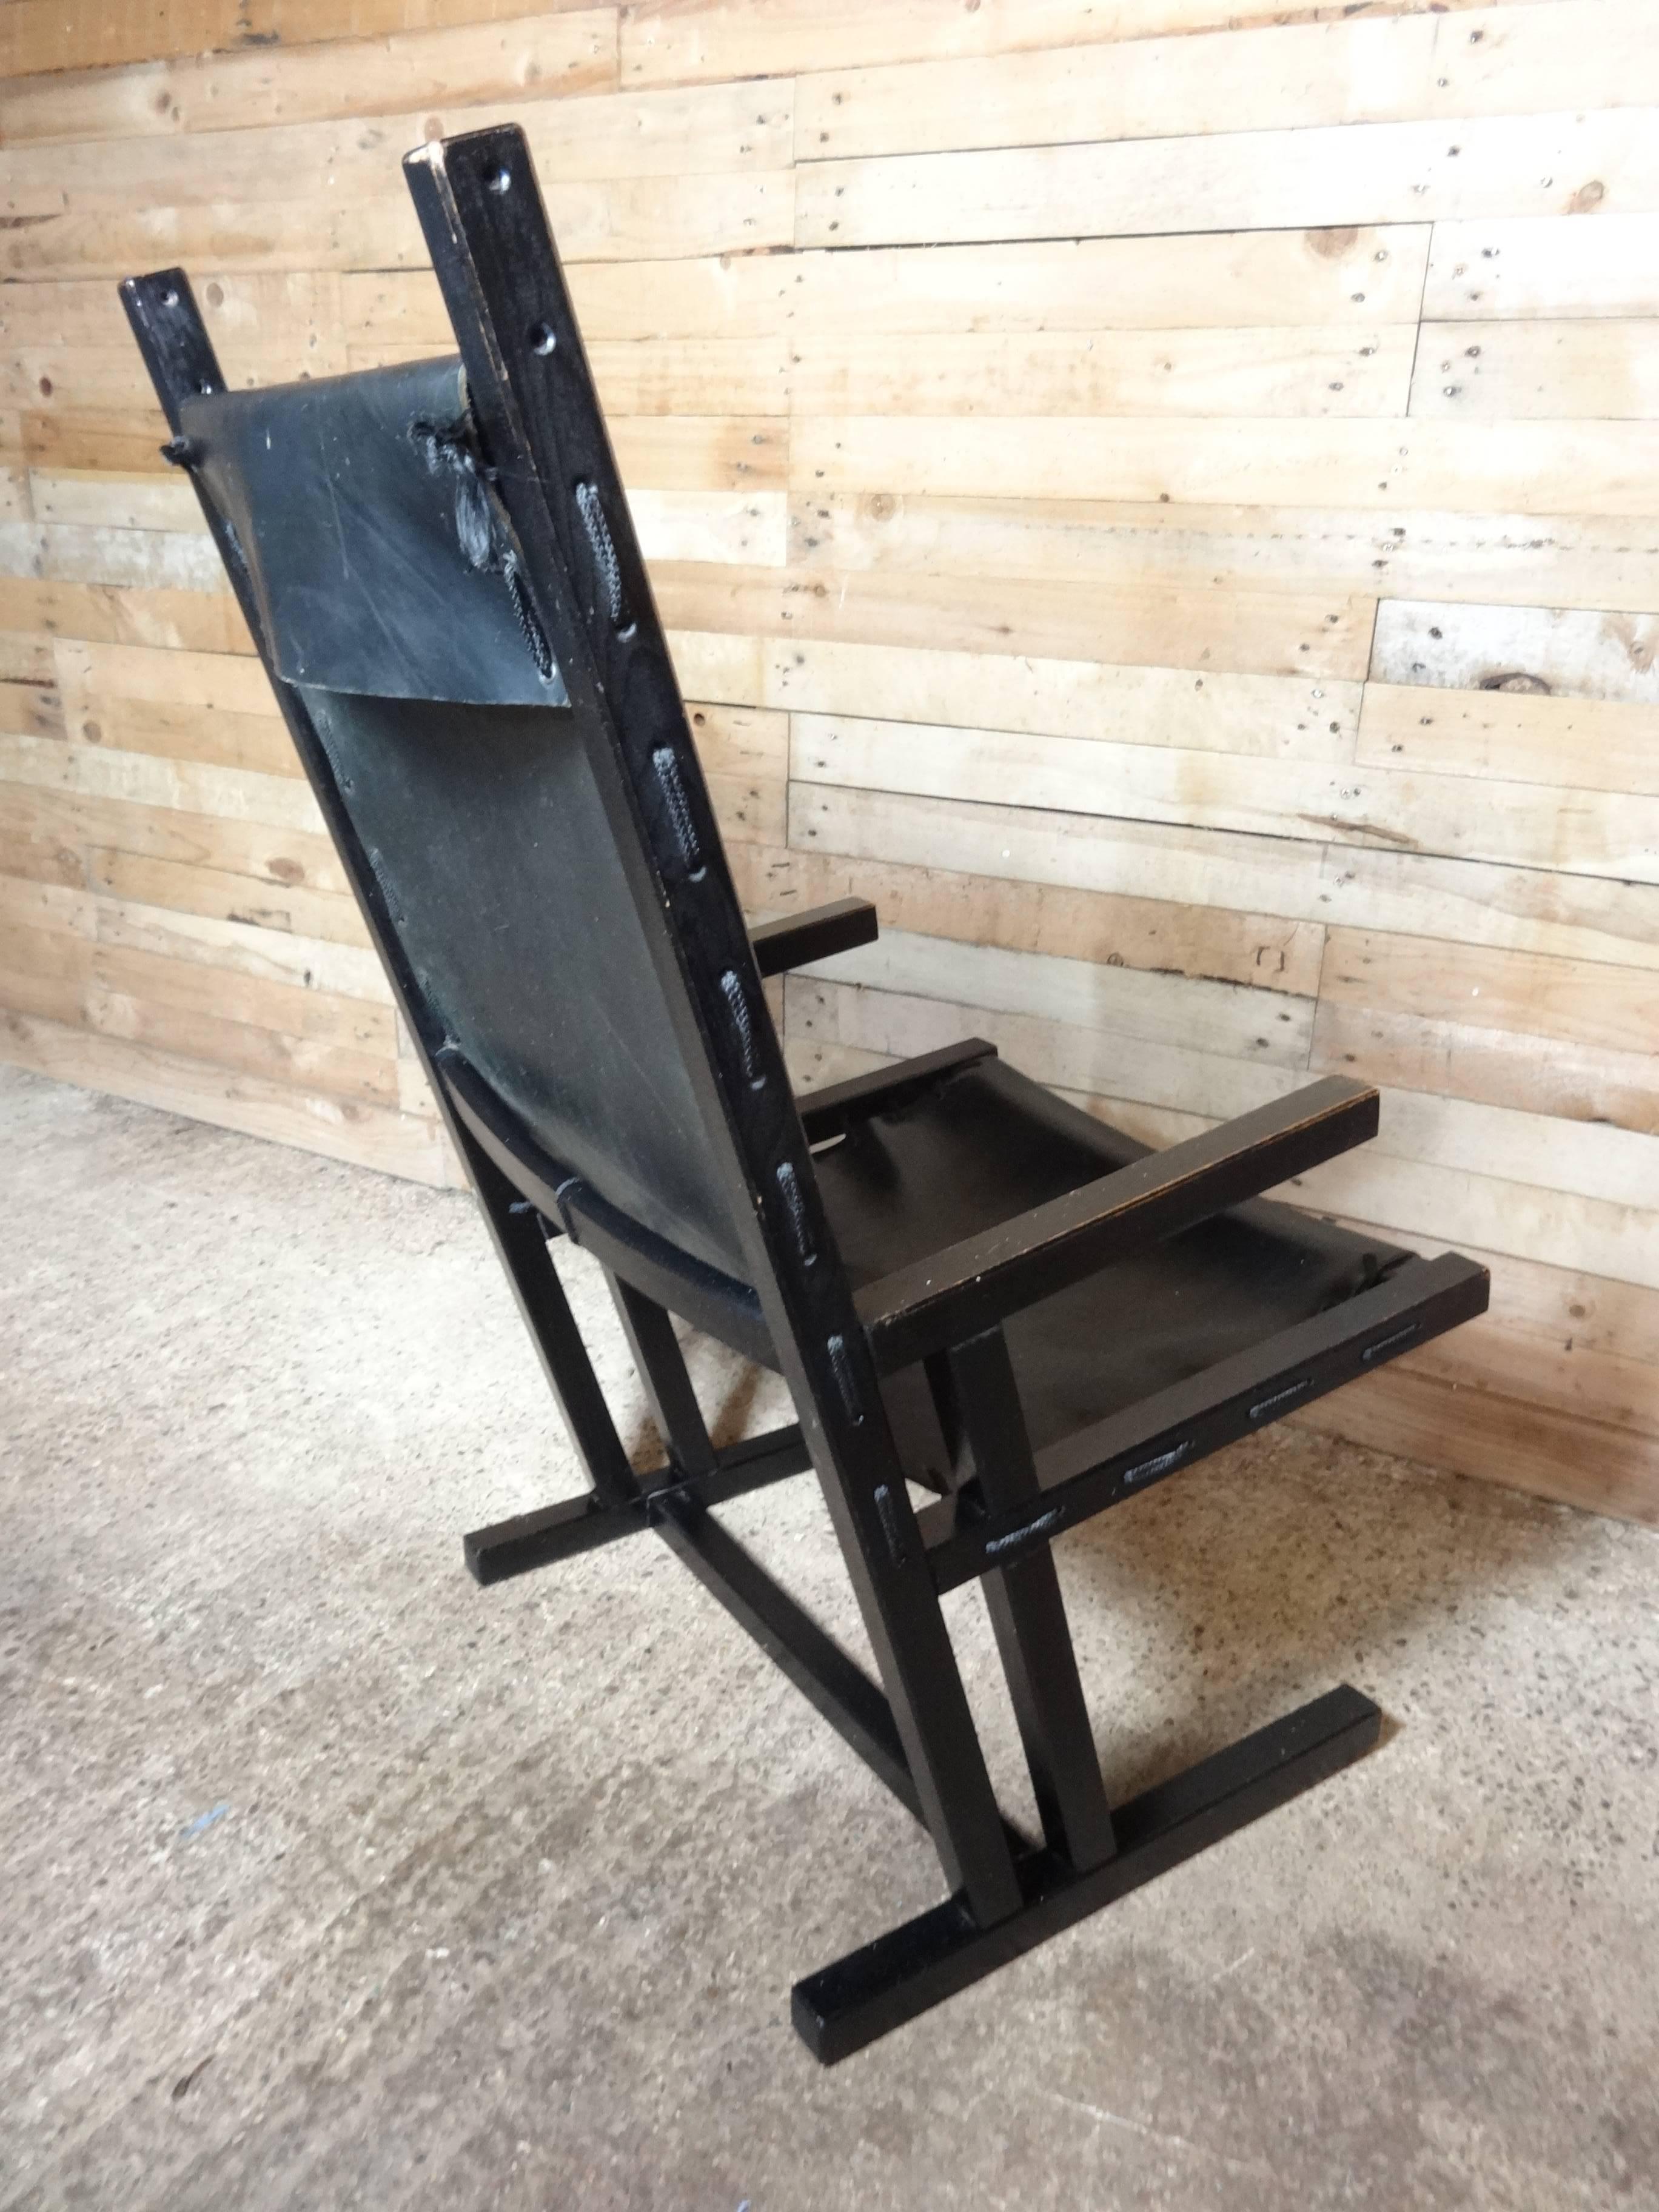 Vintage original Dutch 'Rietveld' style black slingback leather lounge chair.

H 104cm, D 75cm, W 60cm, Seat H 38cm